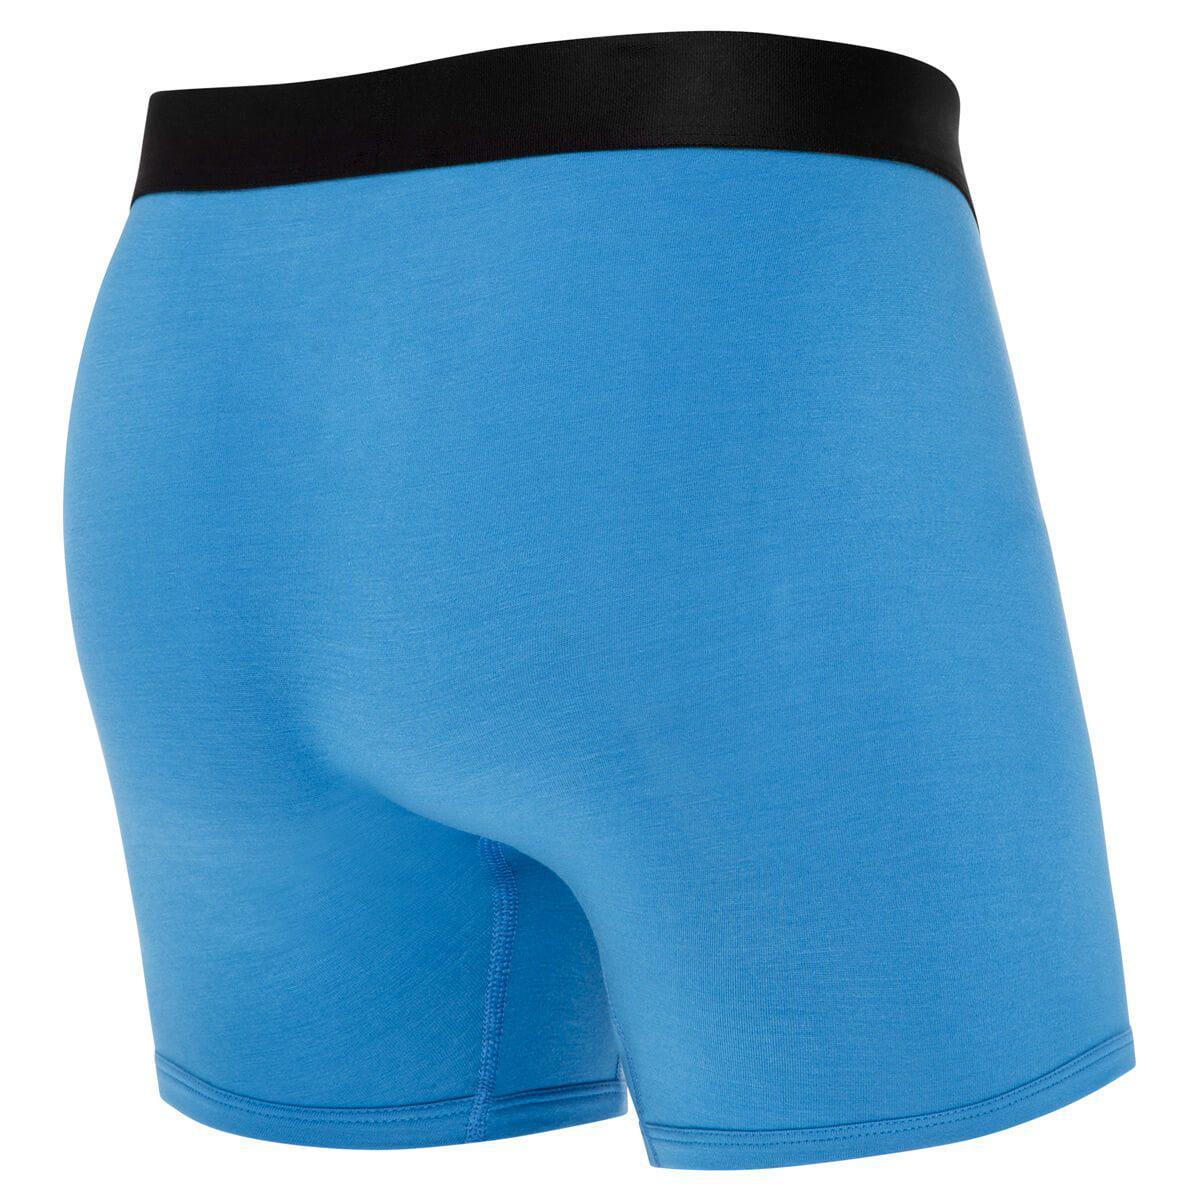 Mens Boxer Briefs Underwear Subscription - Blue back